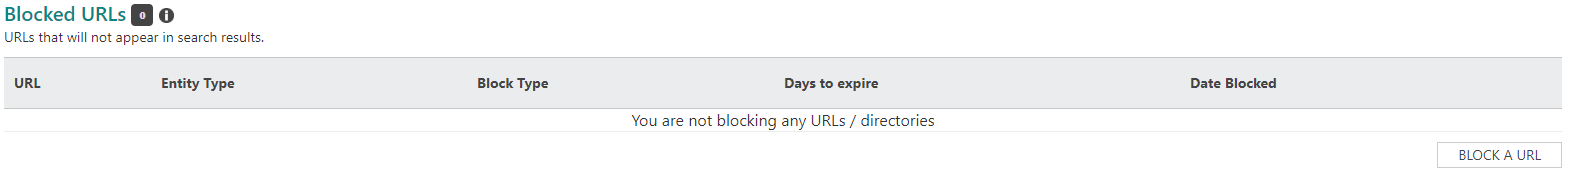 Screenshot of Blocked URLs section in Bing Webmaster Tools